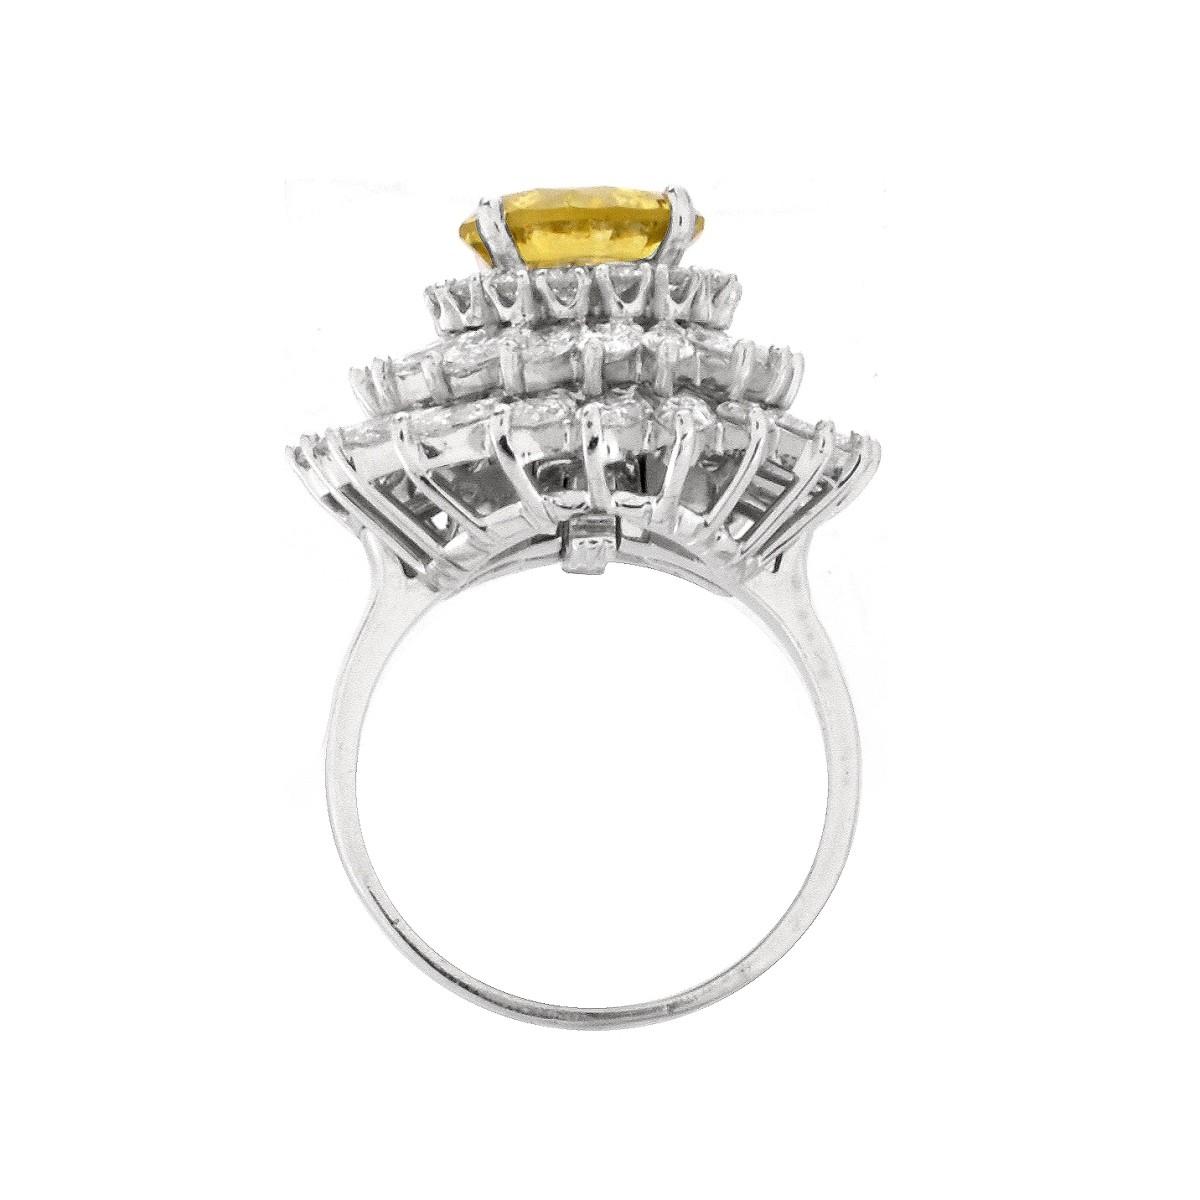 Fancy Vivid Yellow Diamond and Platinum Ring